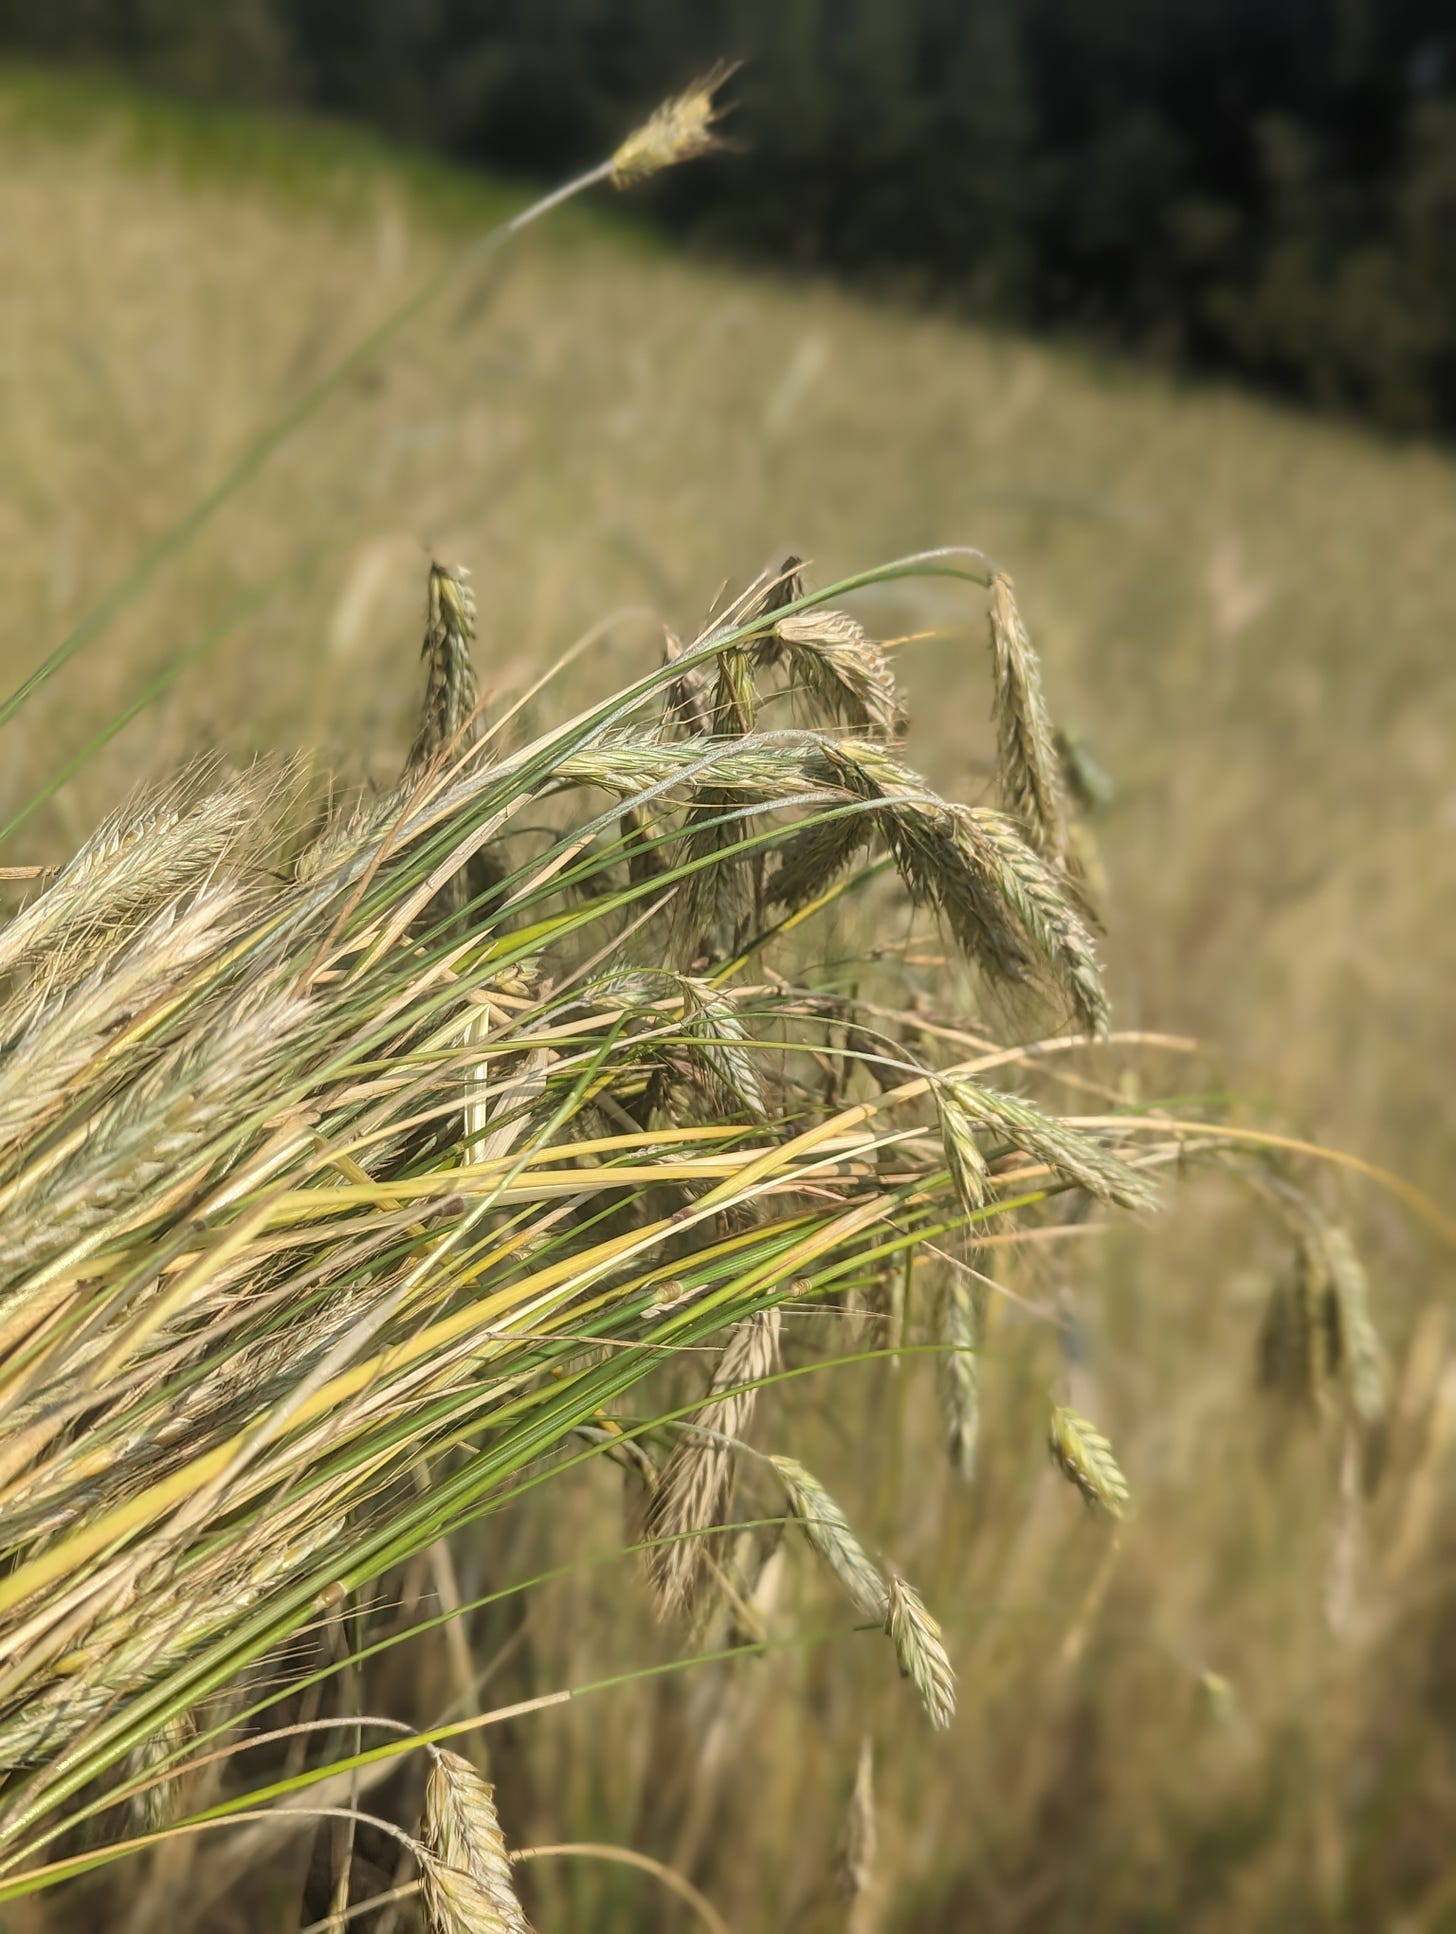 A photo of several stalks of fresh harvested rye grain.